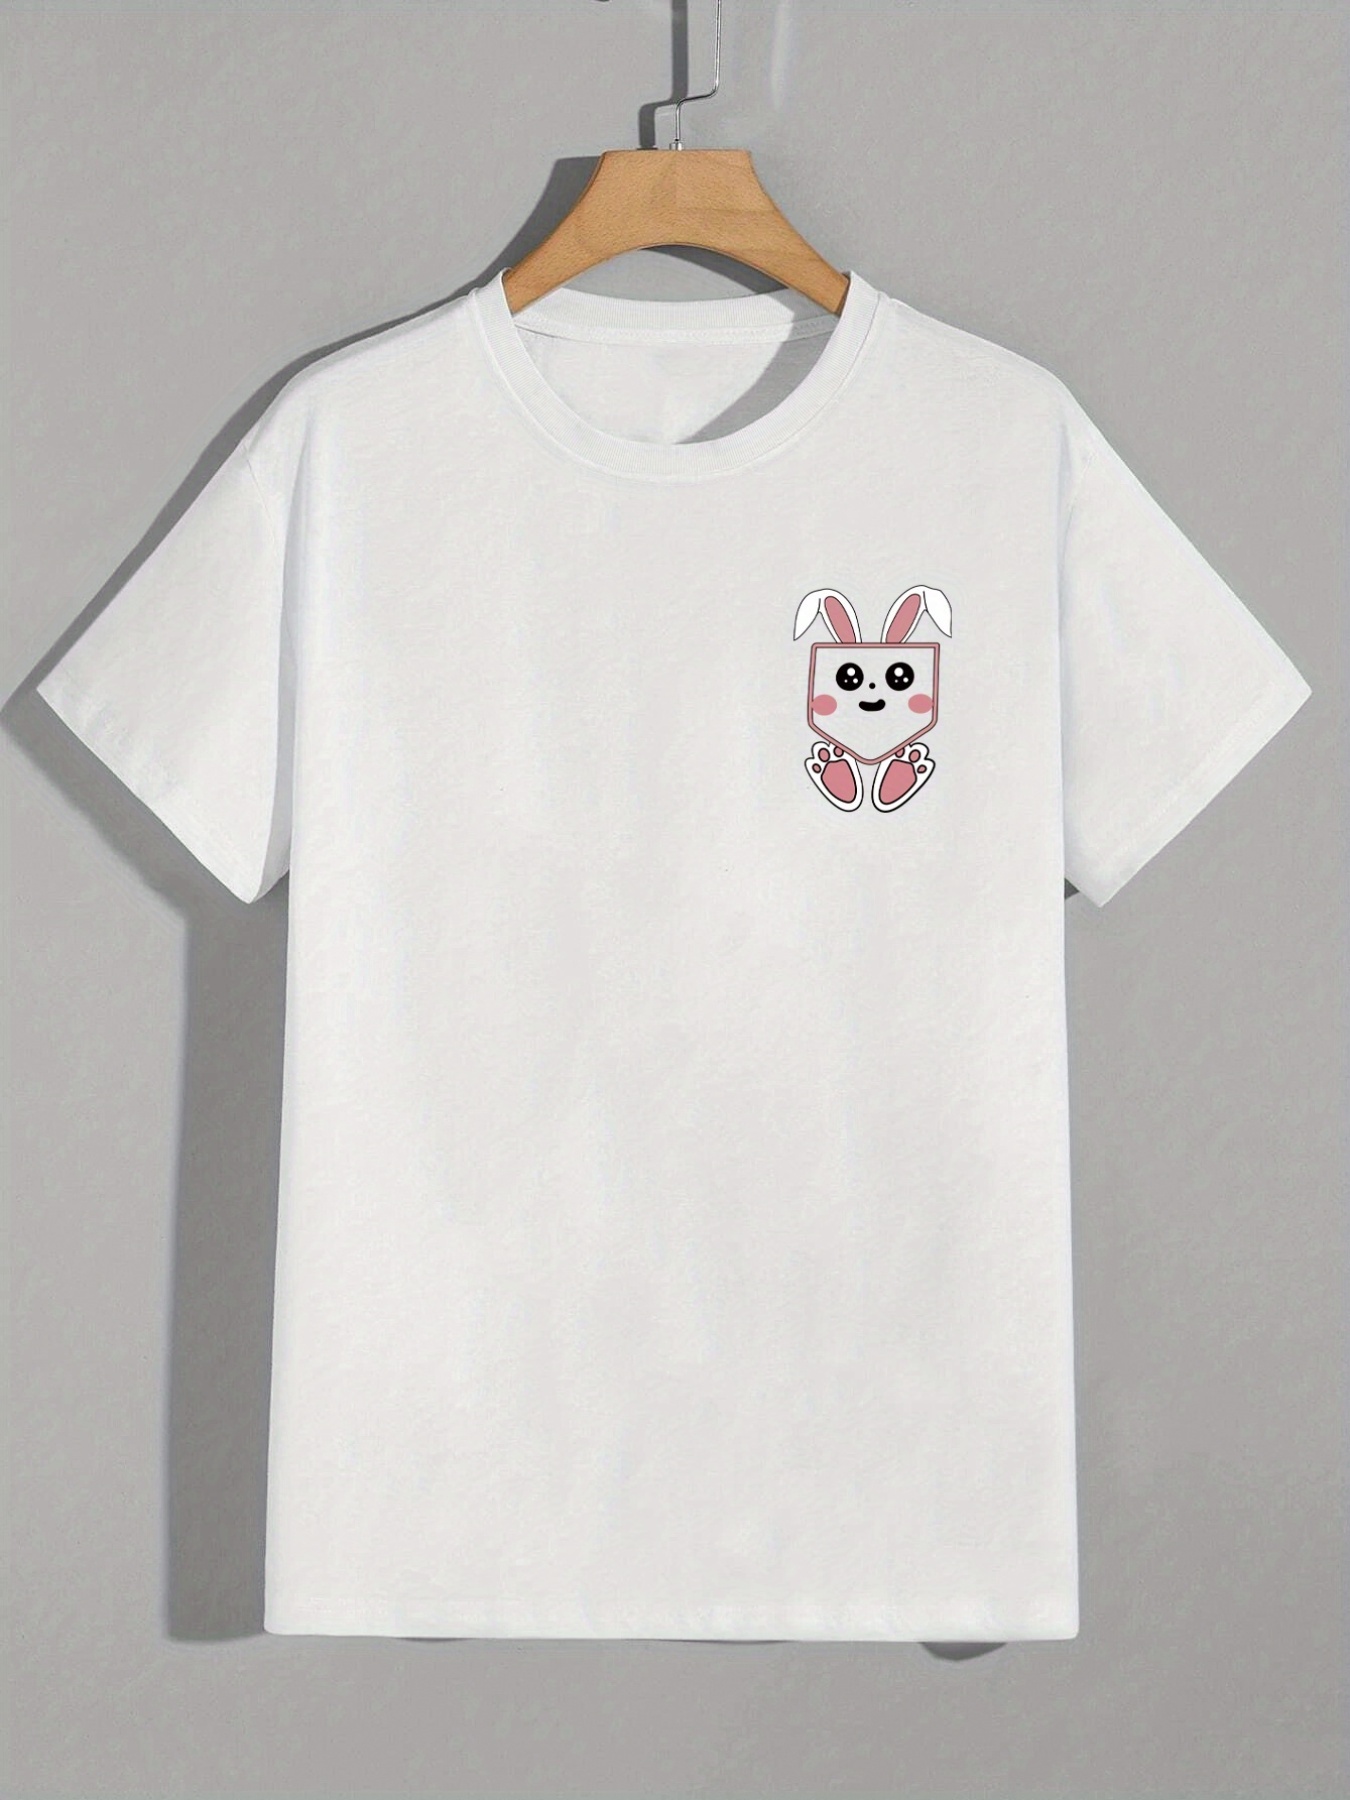 Human Made Pocket Rabbit #2 T-Shirt White